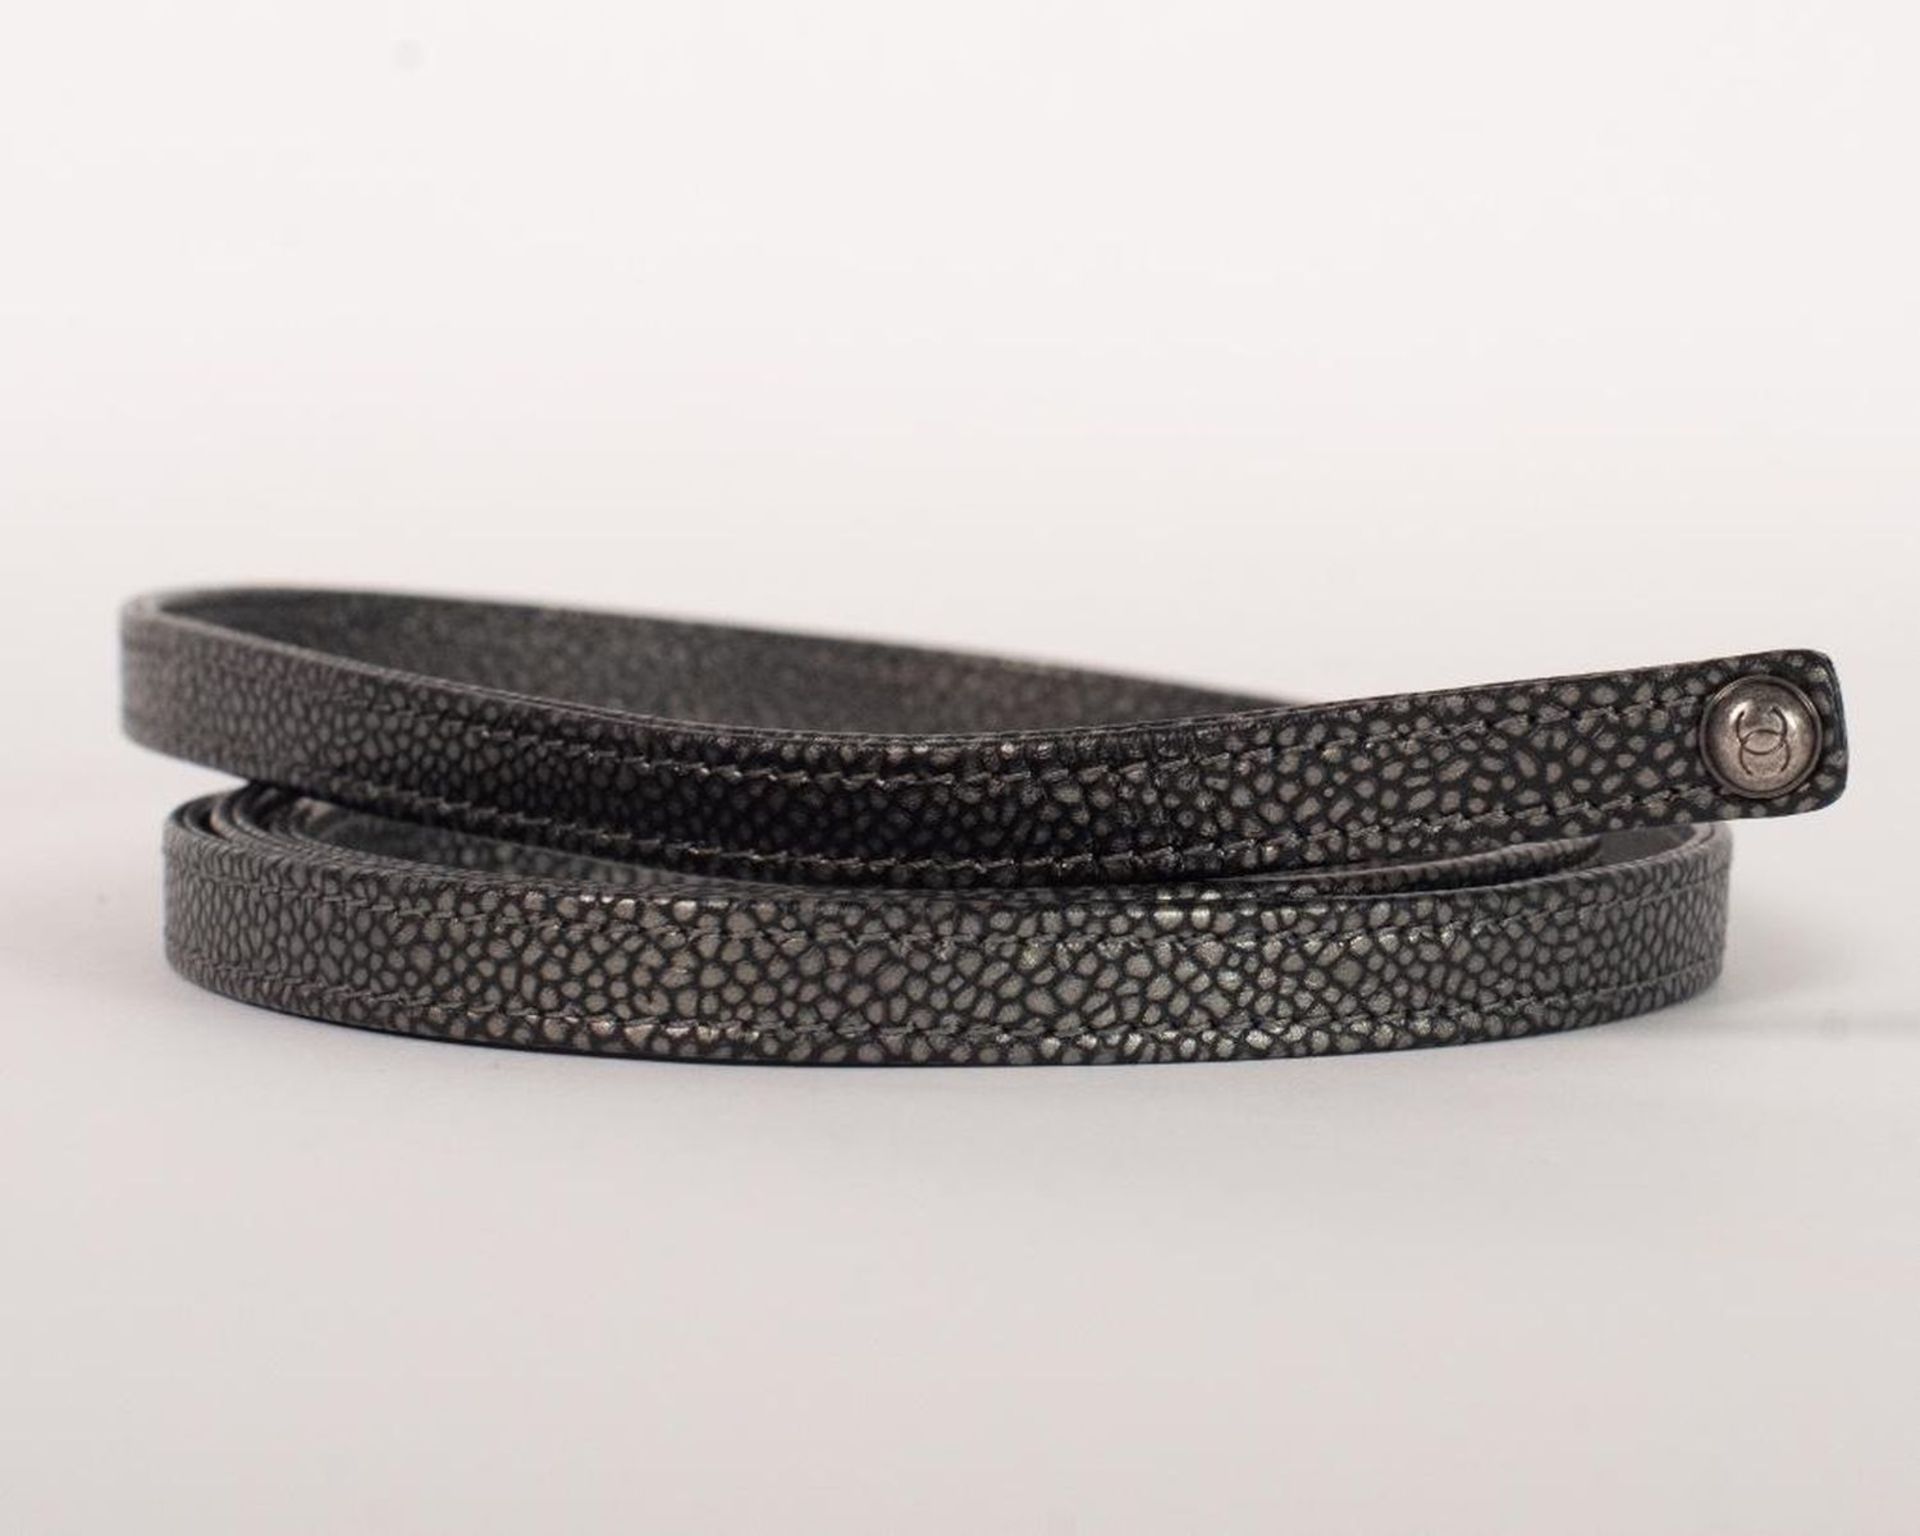 Rare Chanel Gunmetal Caviar Leather Crossbody Bag - Image 12 of 25